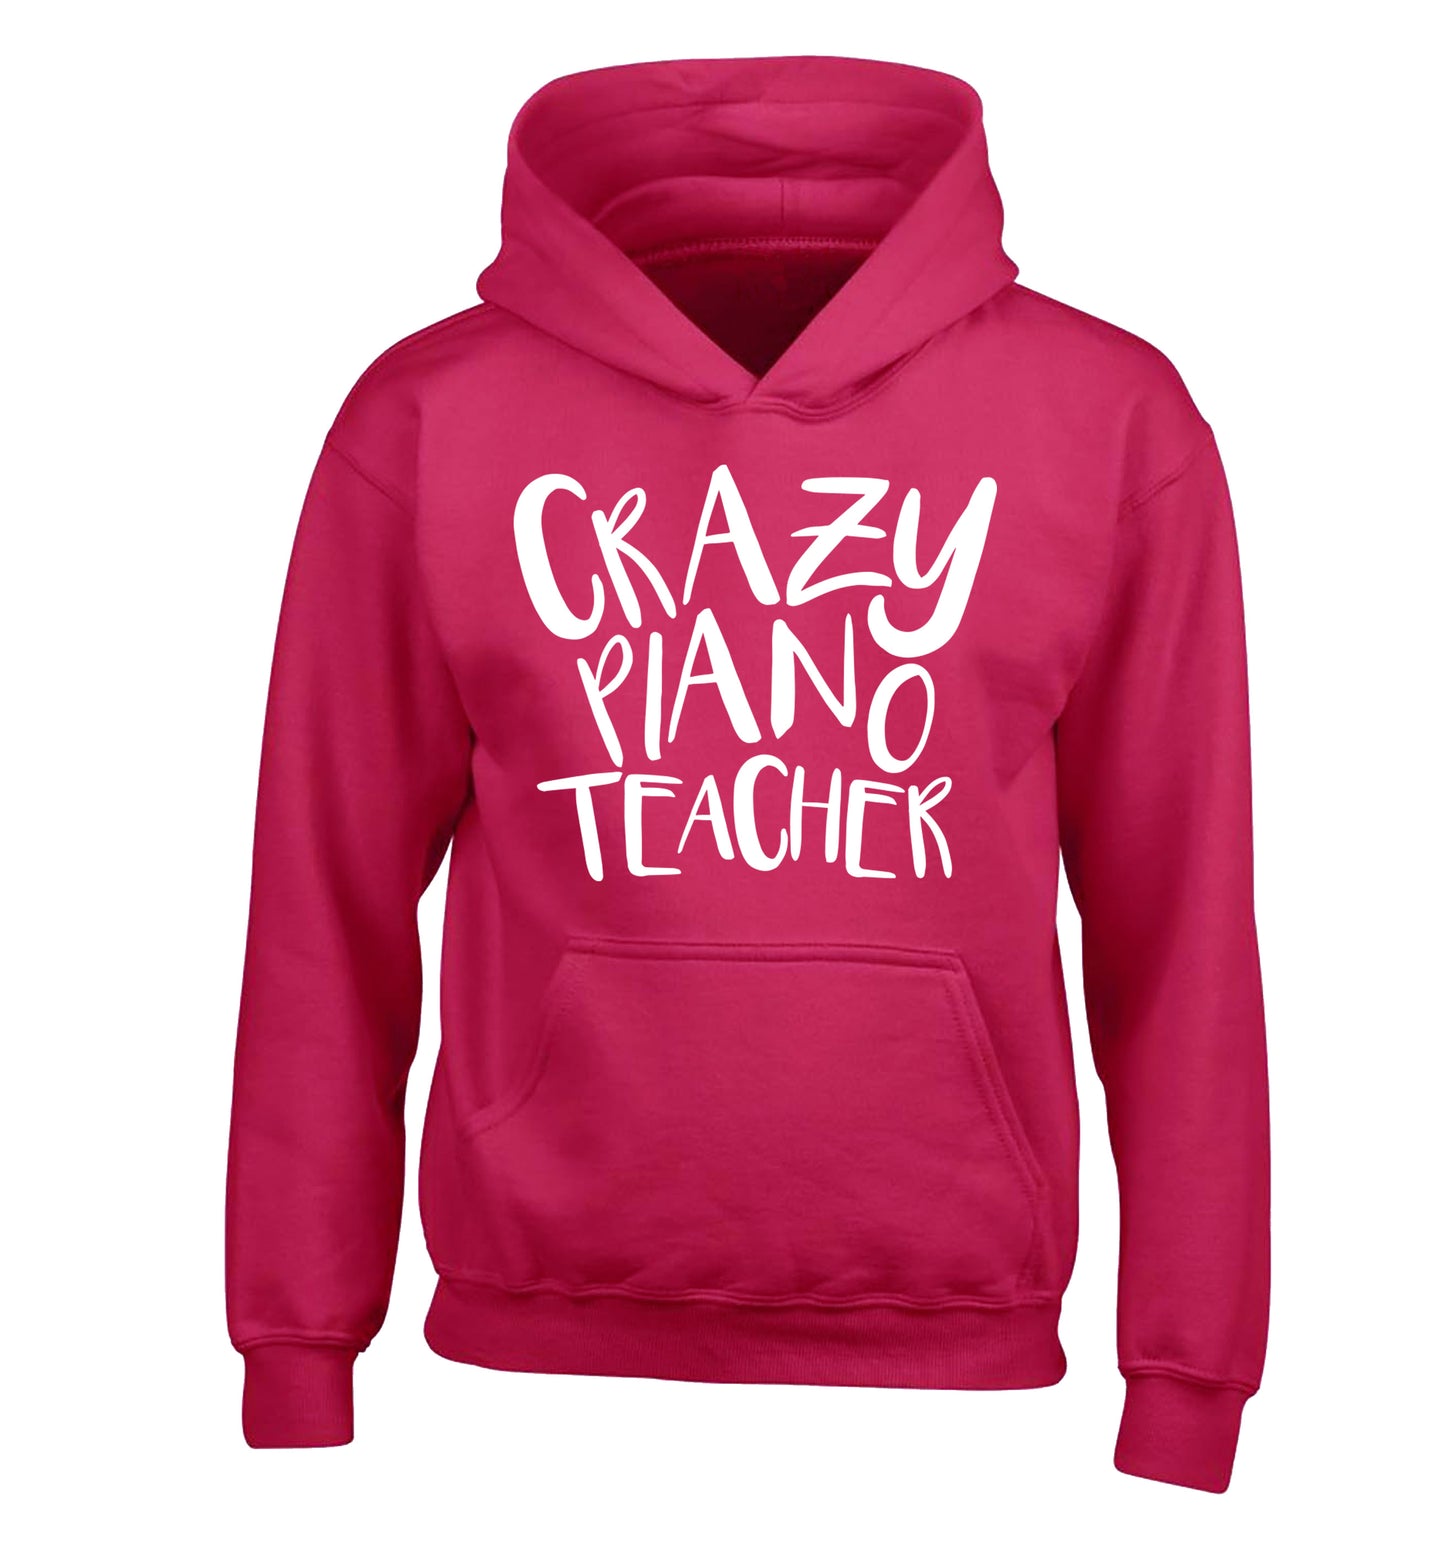 Crazy piano teacher children's pink hoodie 12-13 Years